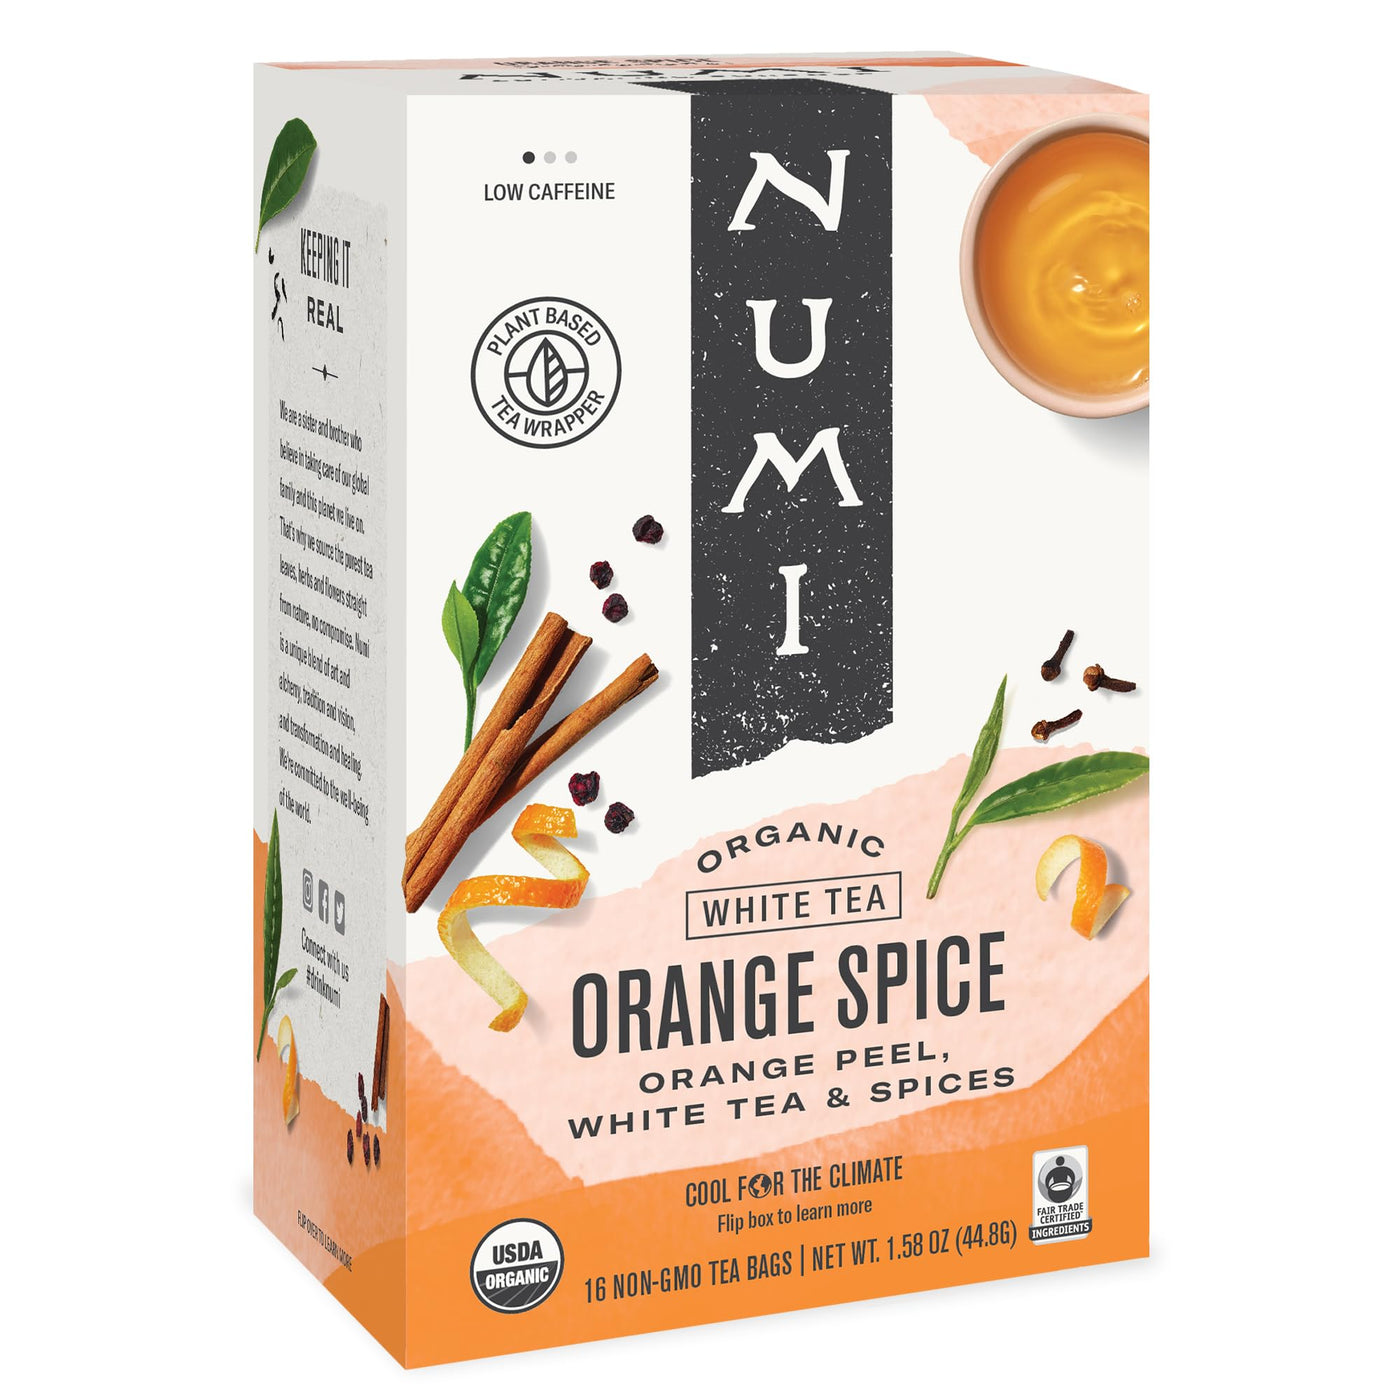 Organic Orange Spice White Tea